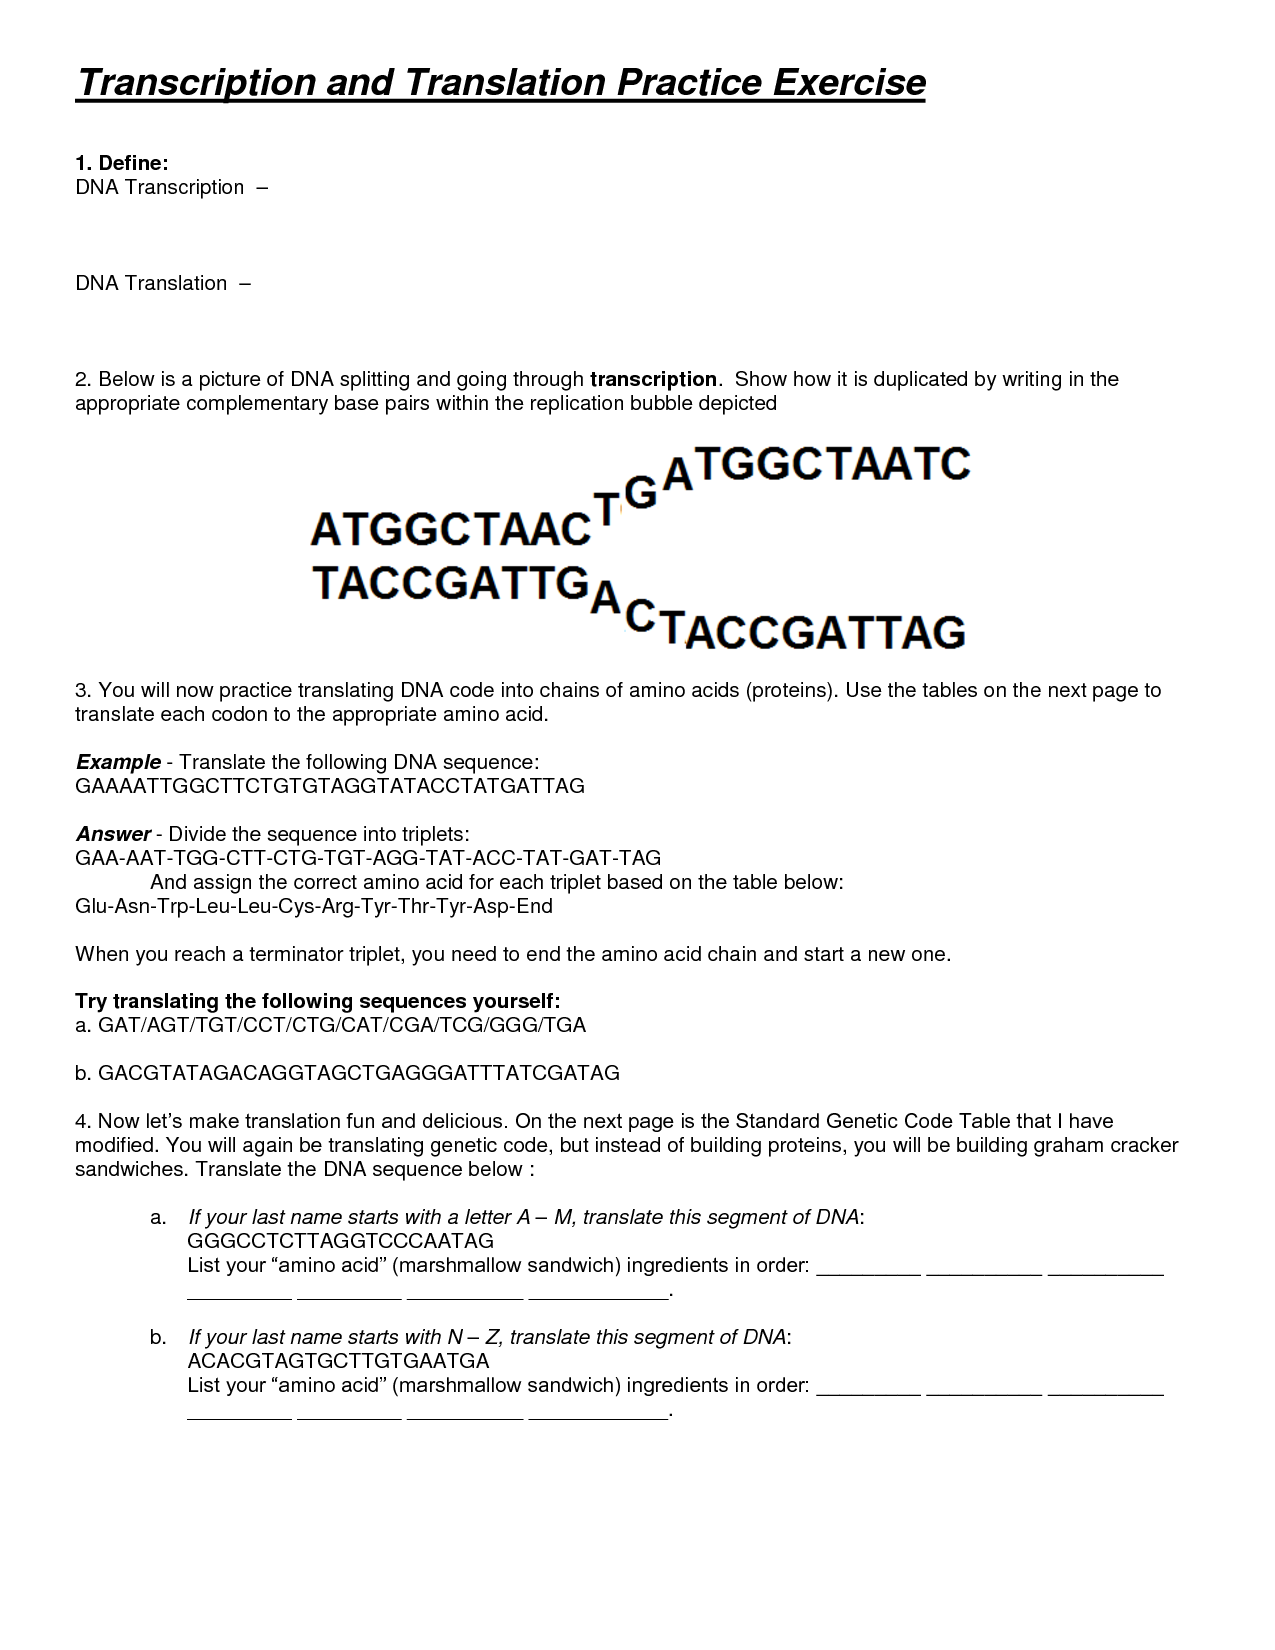 DNA Transcription and Translation Worksheet Answers